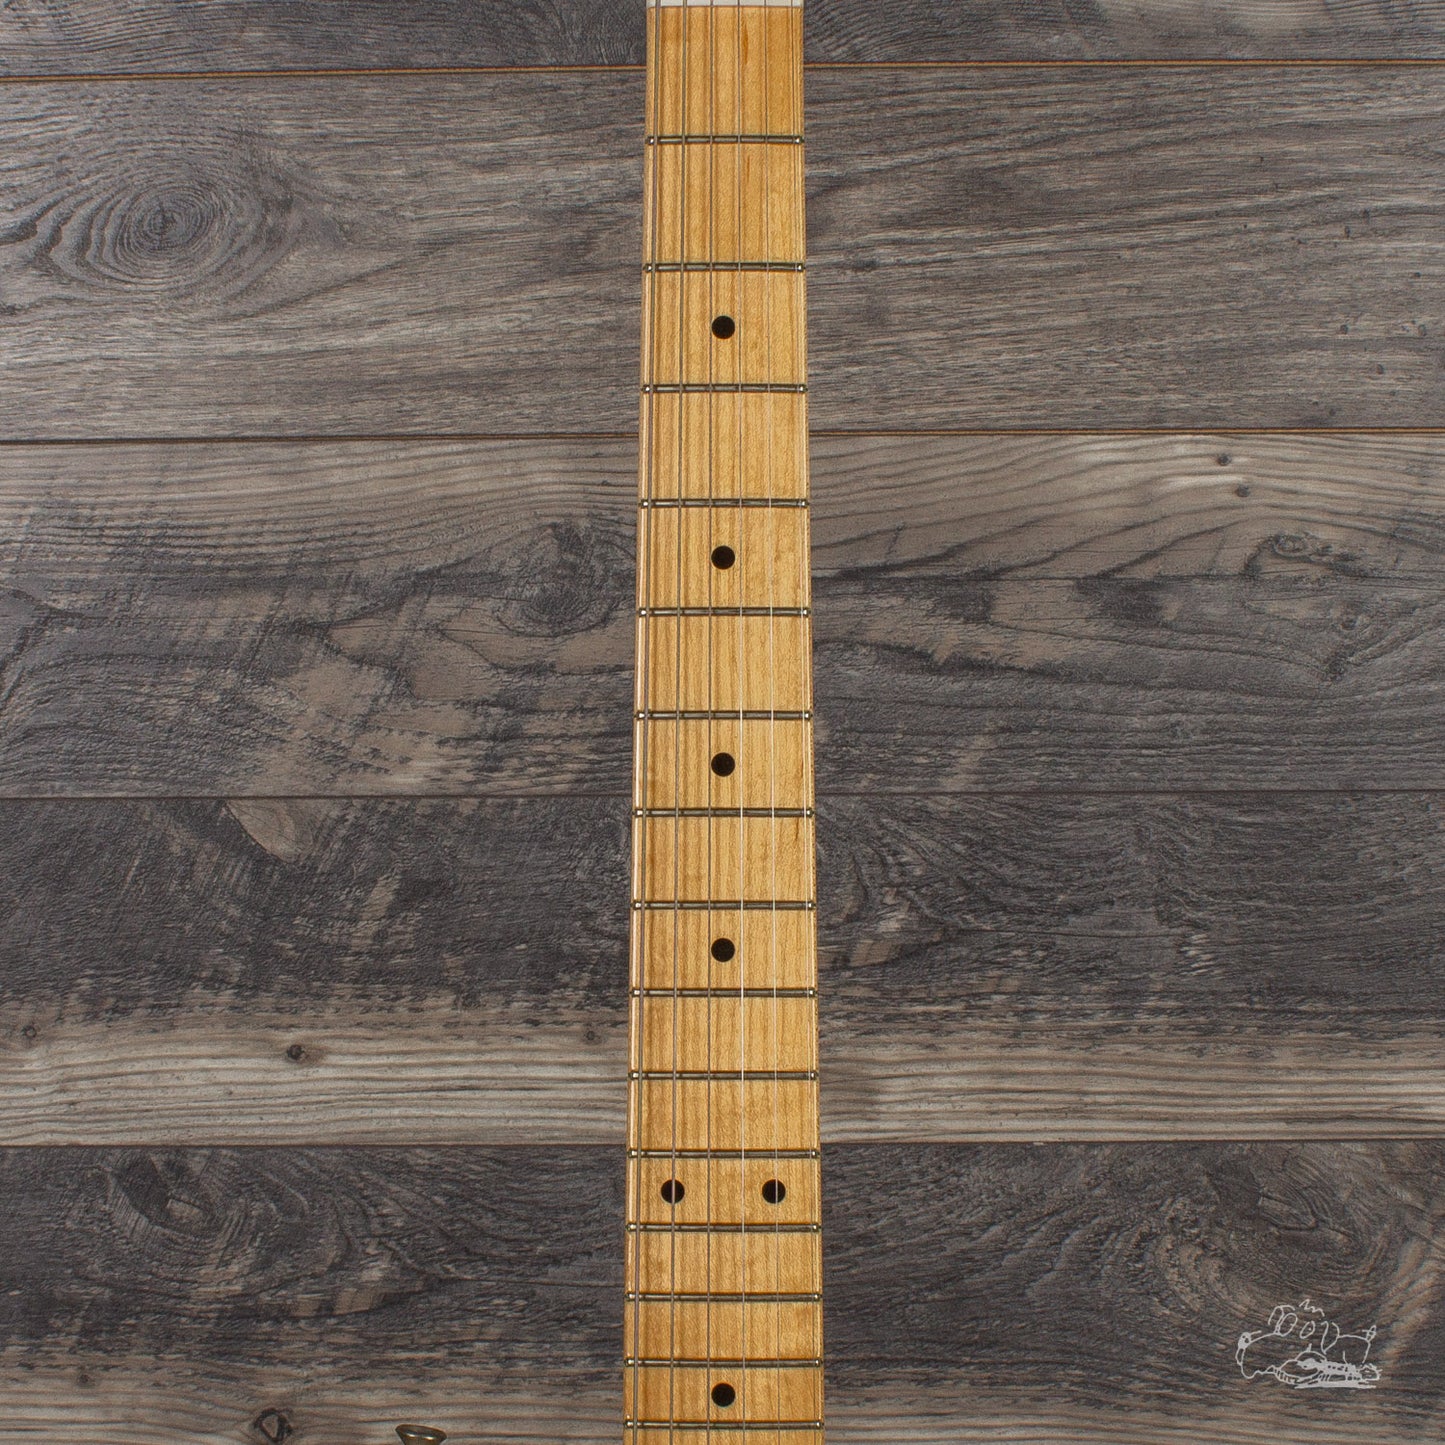 2015 Fender Korina '52 Telecaster